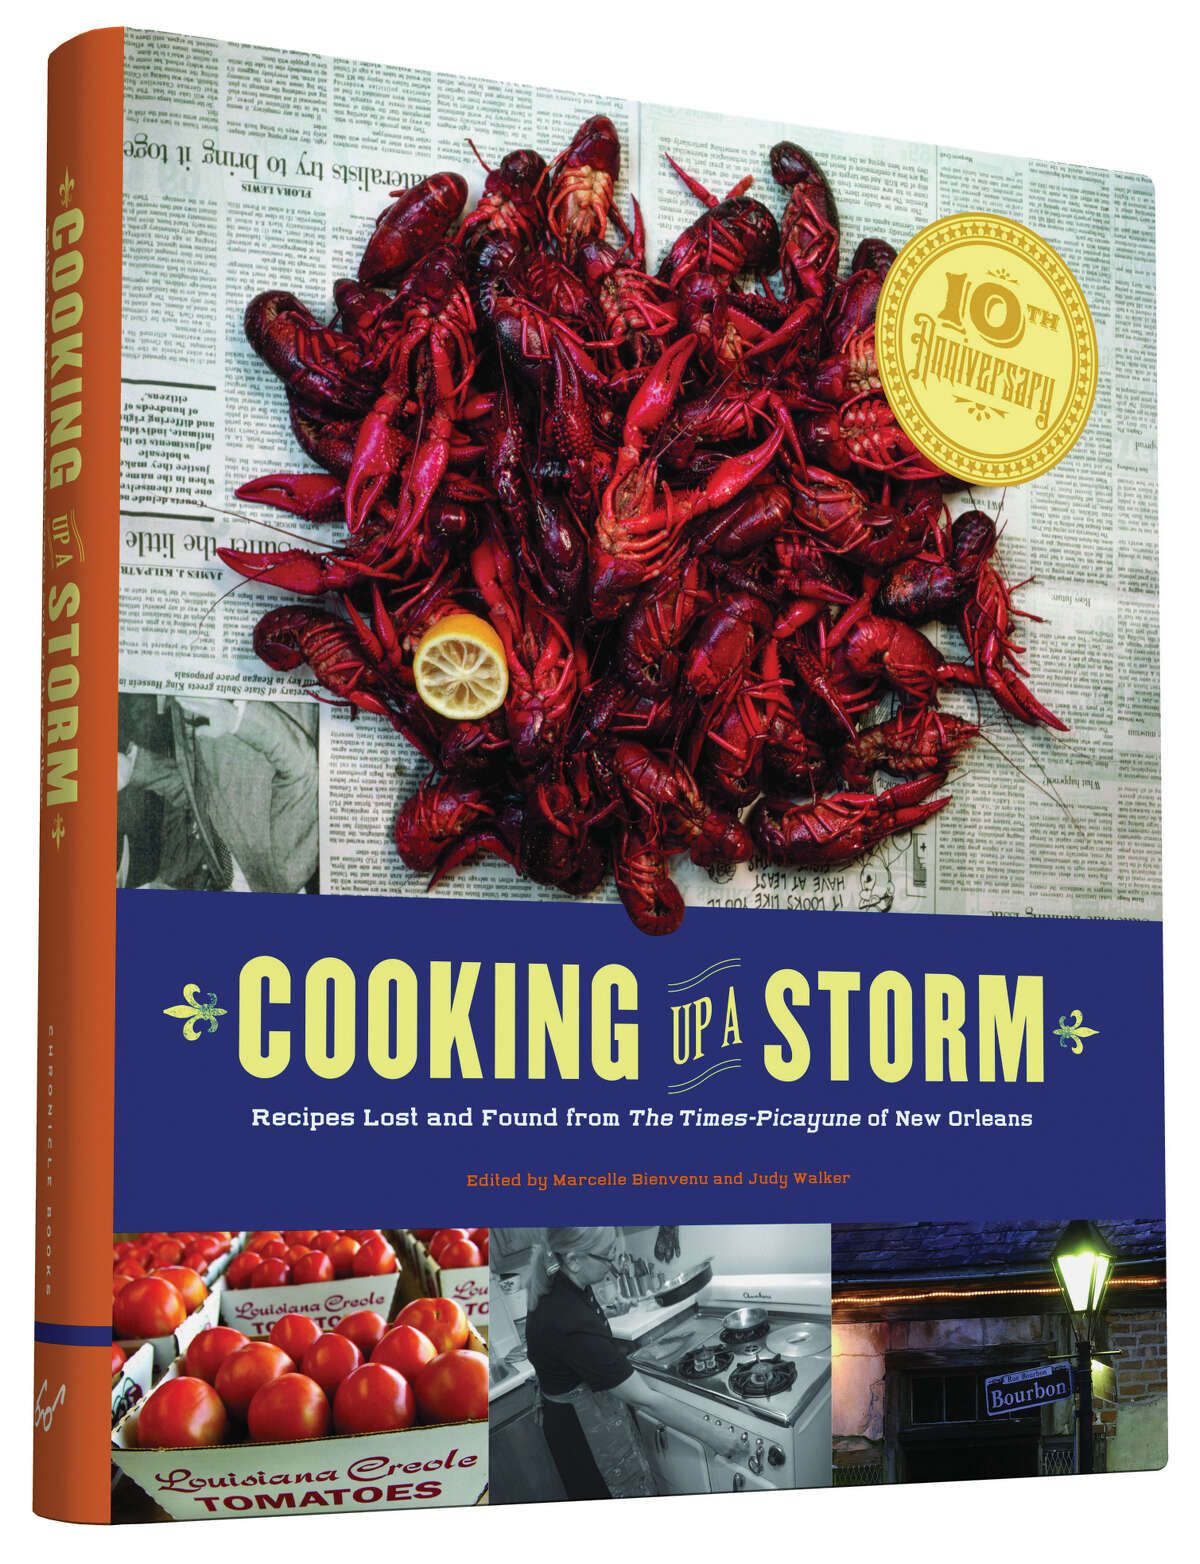 Cookbook helped post-Katrina Louisiana replace lost recipes